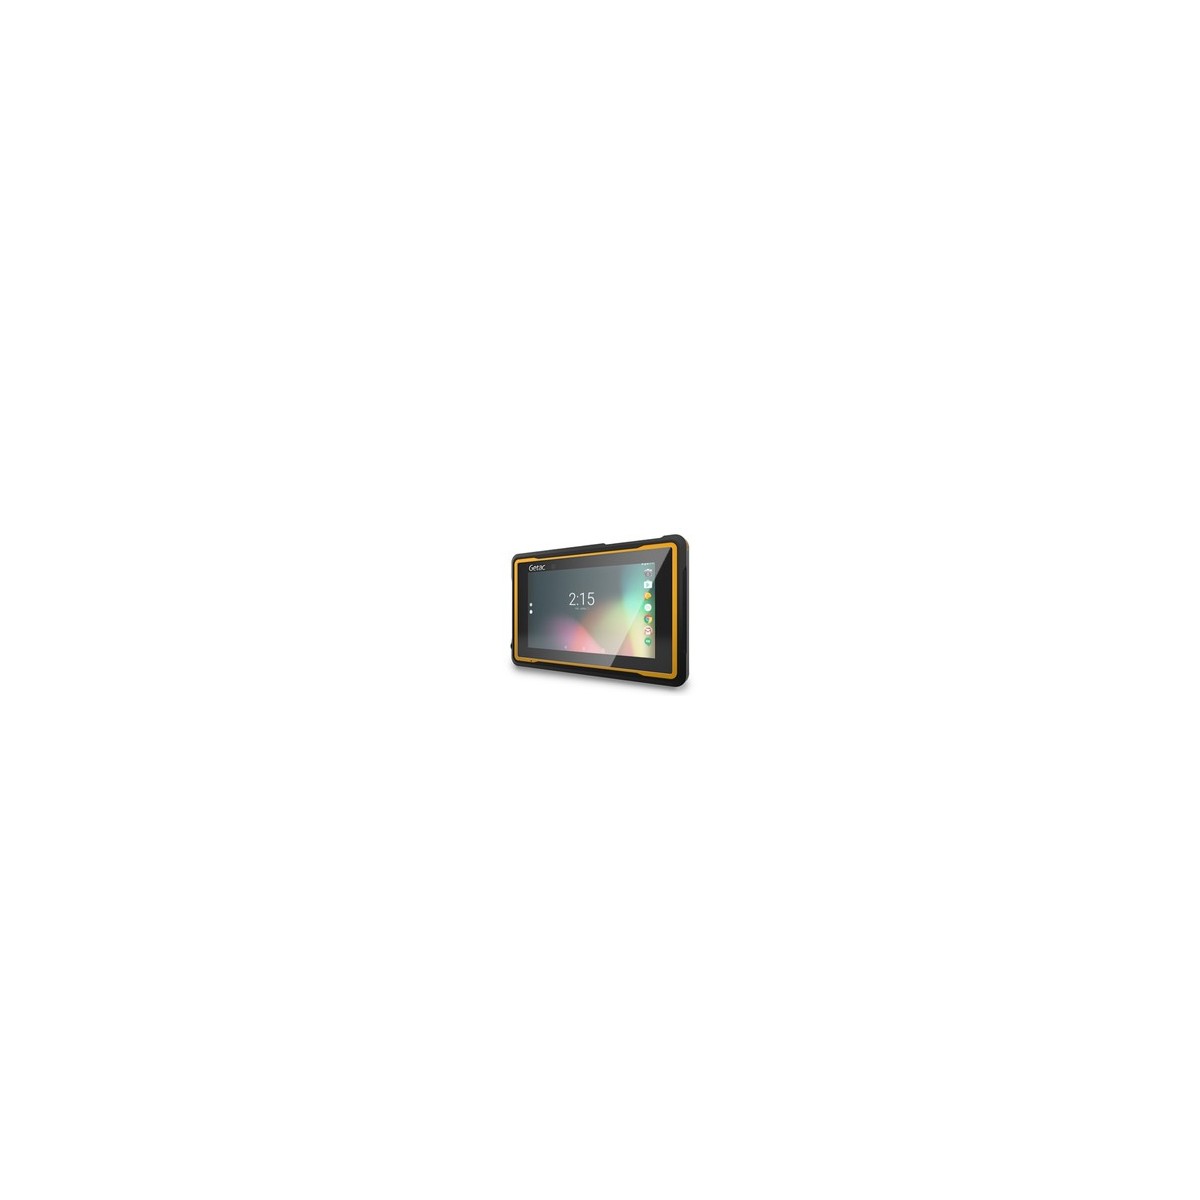 GETAC ZX70 G2 - 17.8 cm (7) - 1280 x 720 pixels - 64 GB - 4 GB - Android 9.0 - Black - Yellow